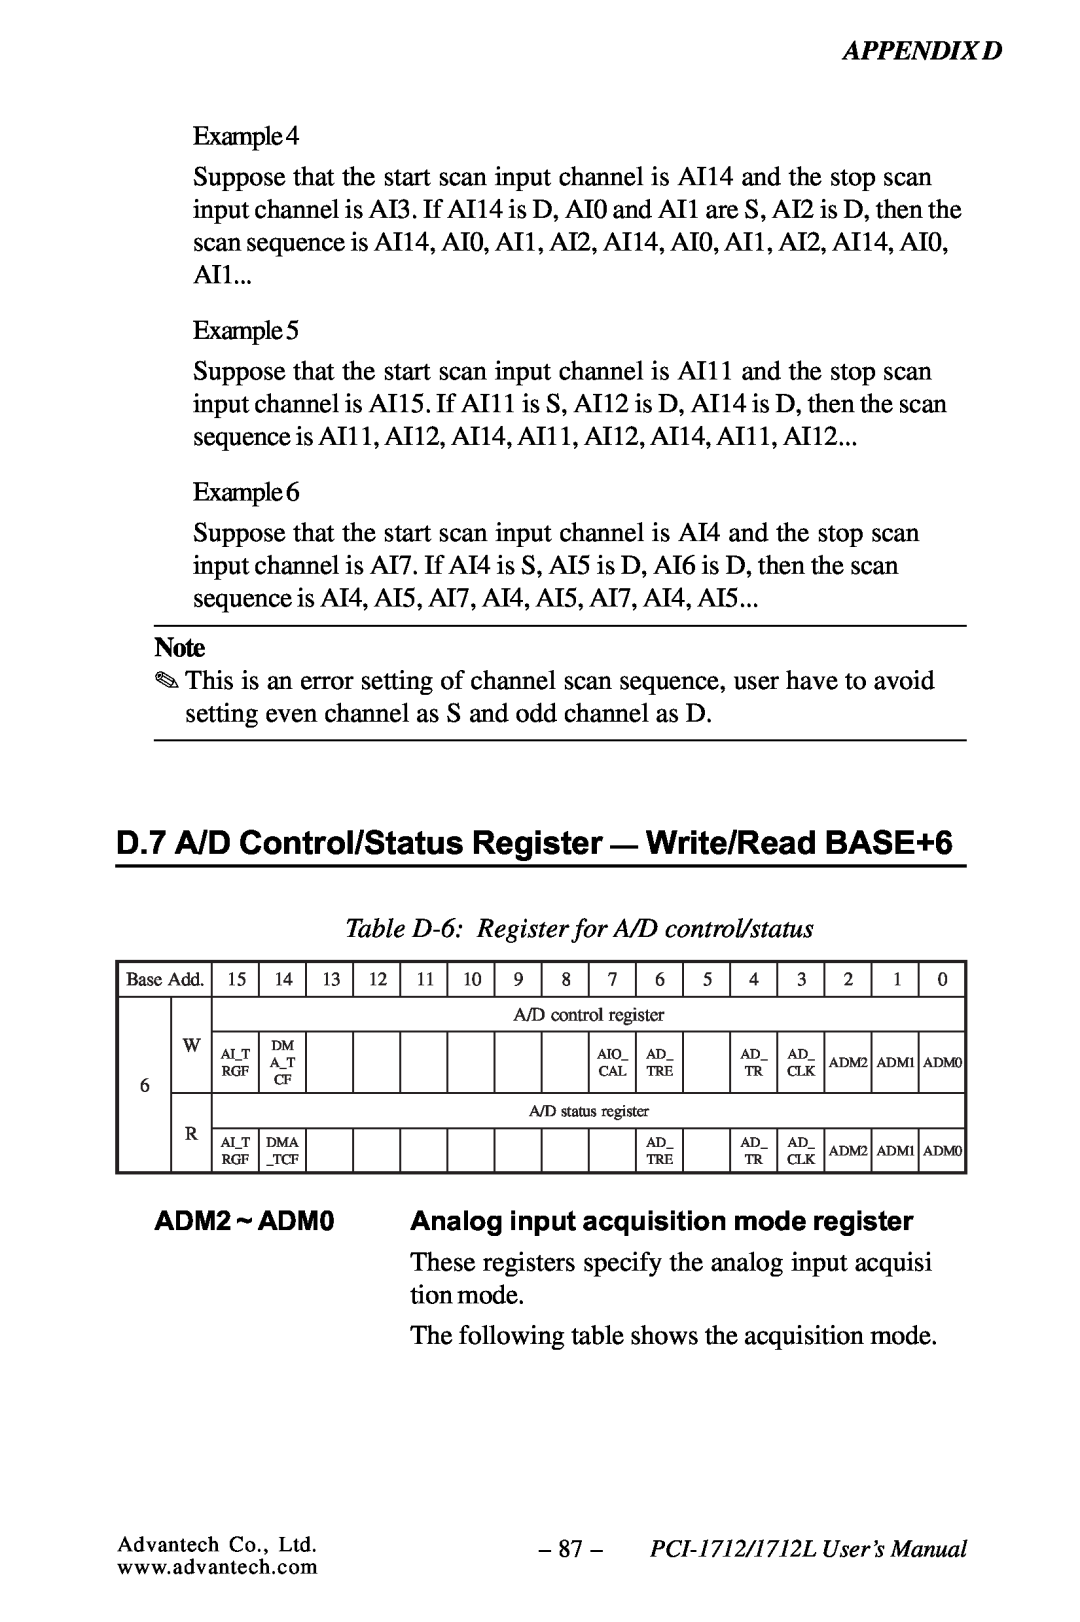 Konica Minolta PCI-1712L D.7 A/D Control/Status Register, Write/Read BASE+6, Table D-6 Register for A/D control/status 